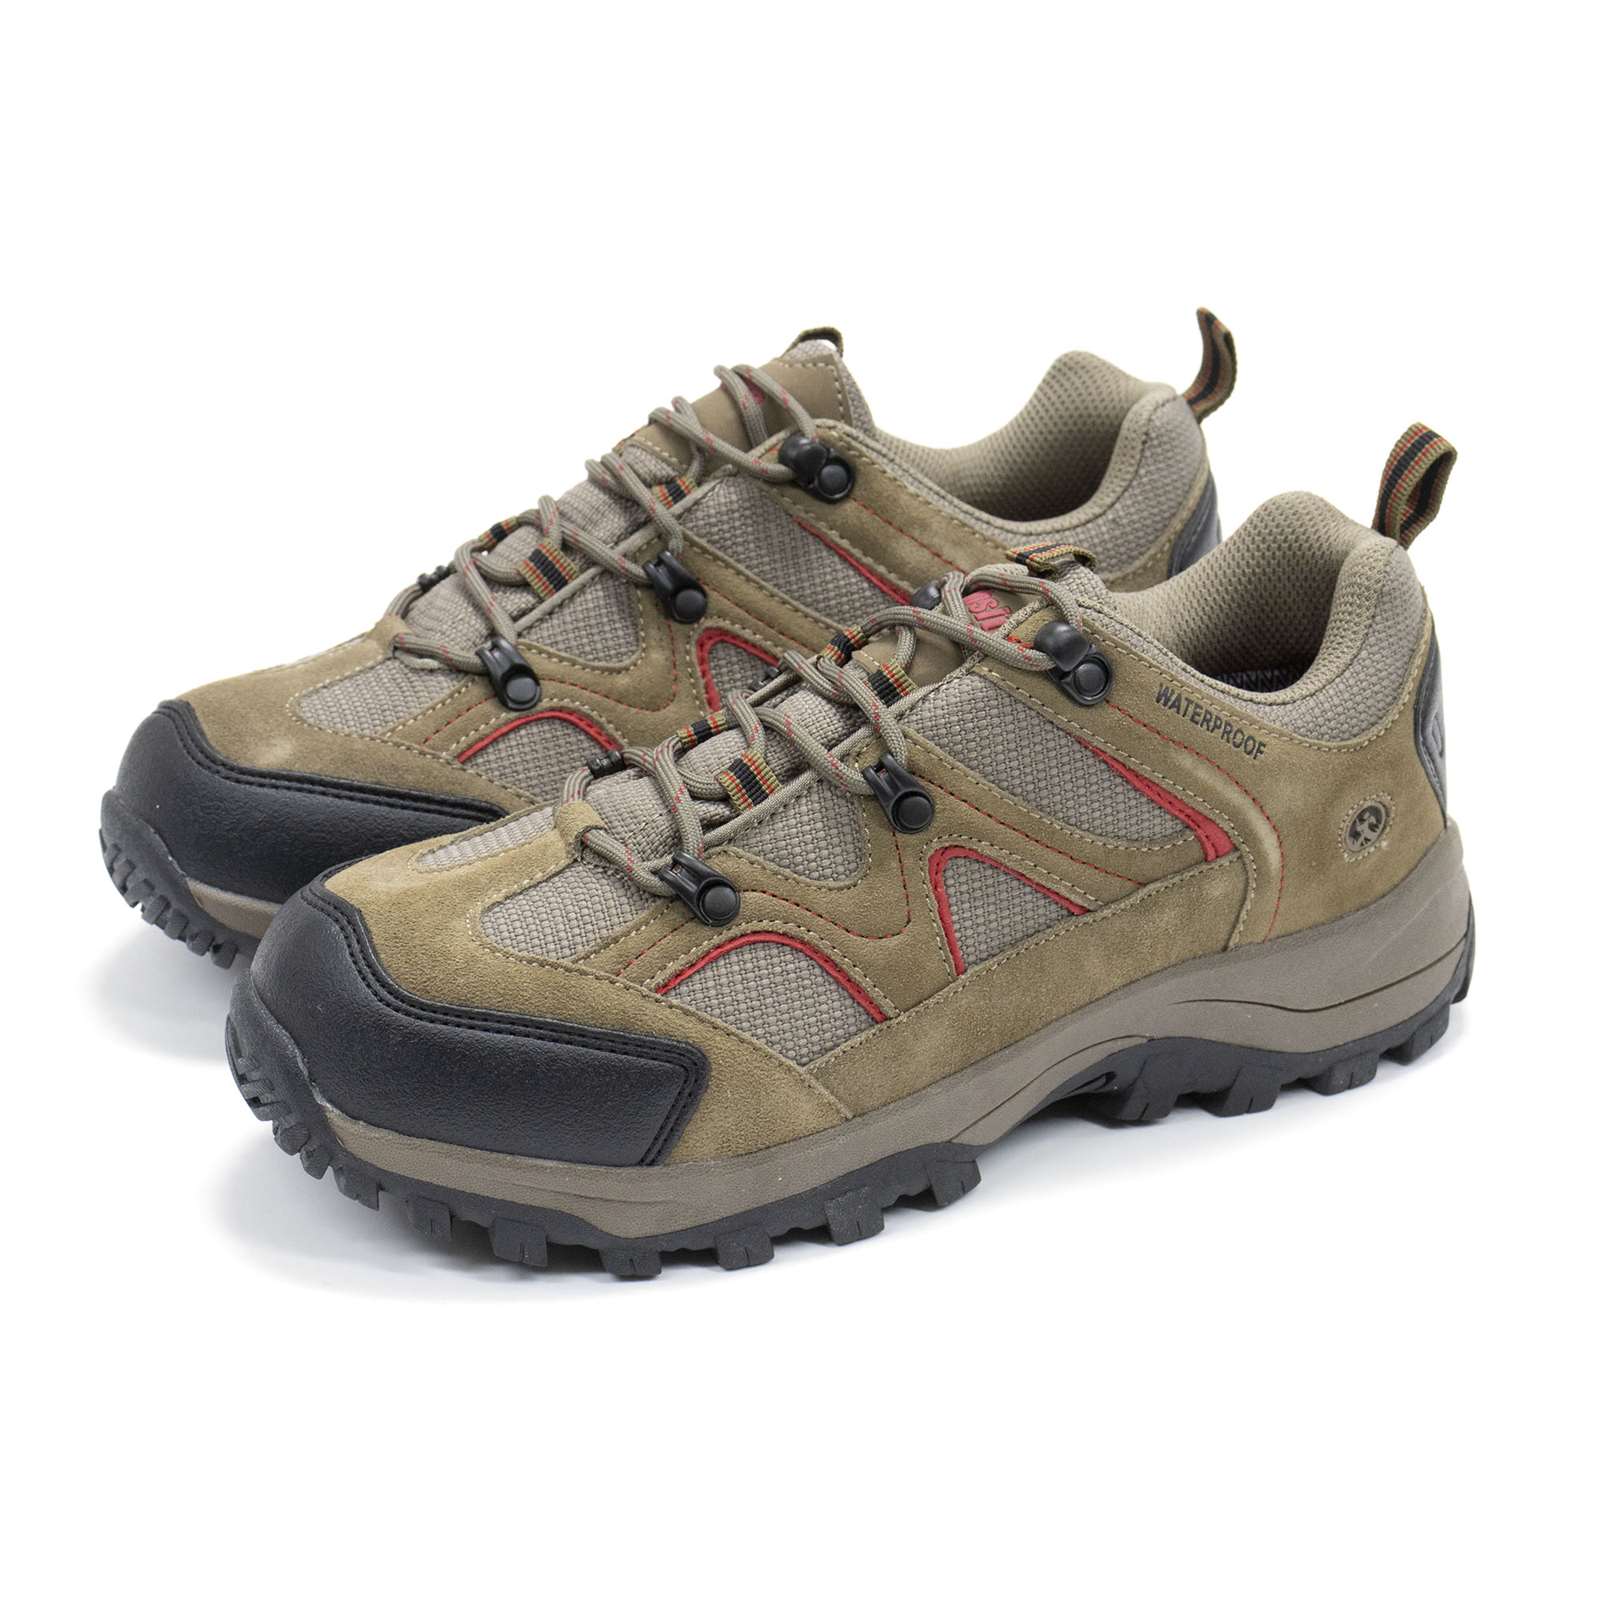 Northside Men Snohomish Low Waterproof Hiking Shoes